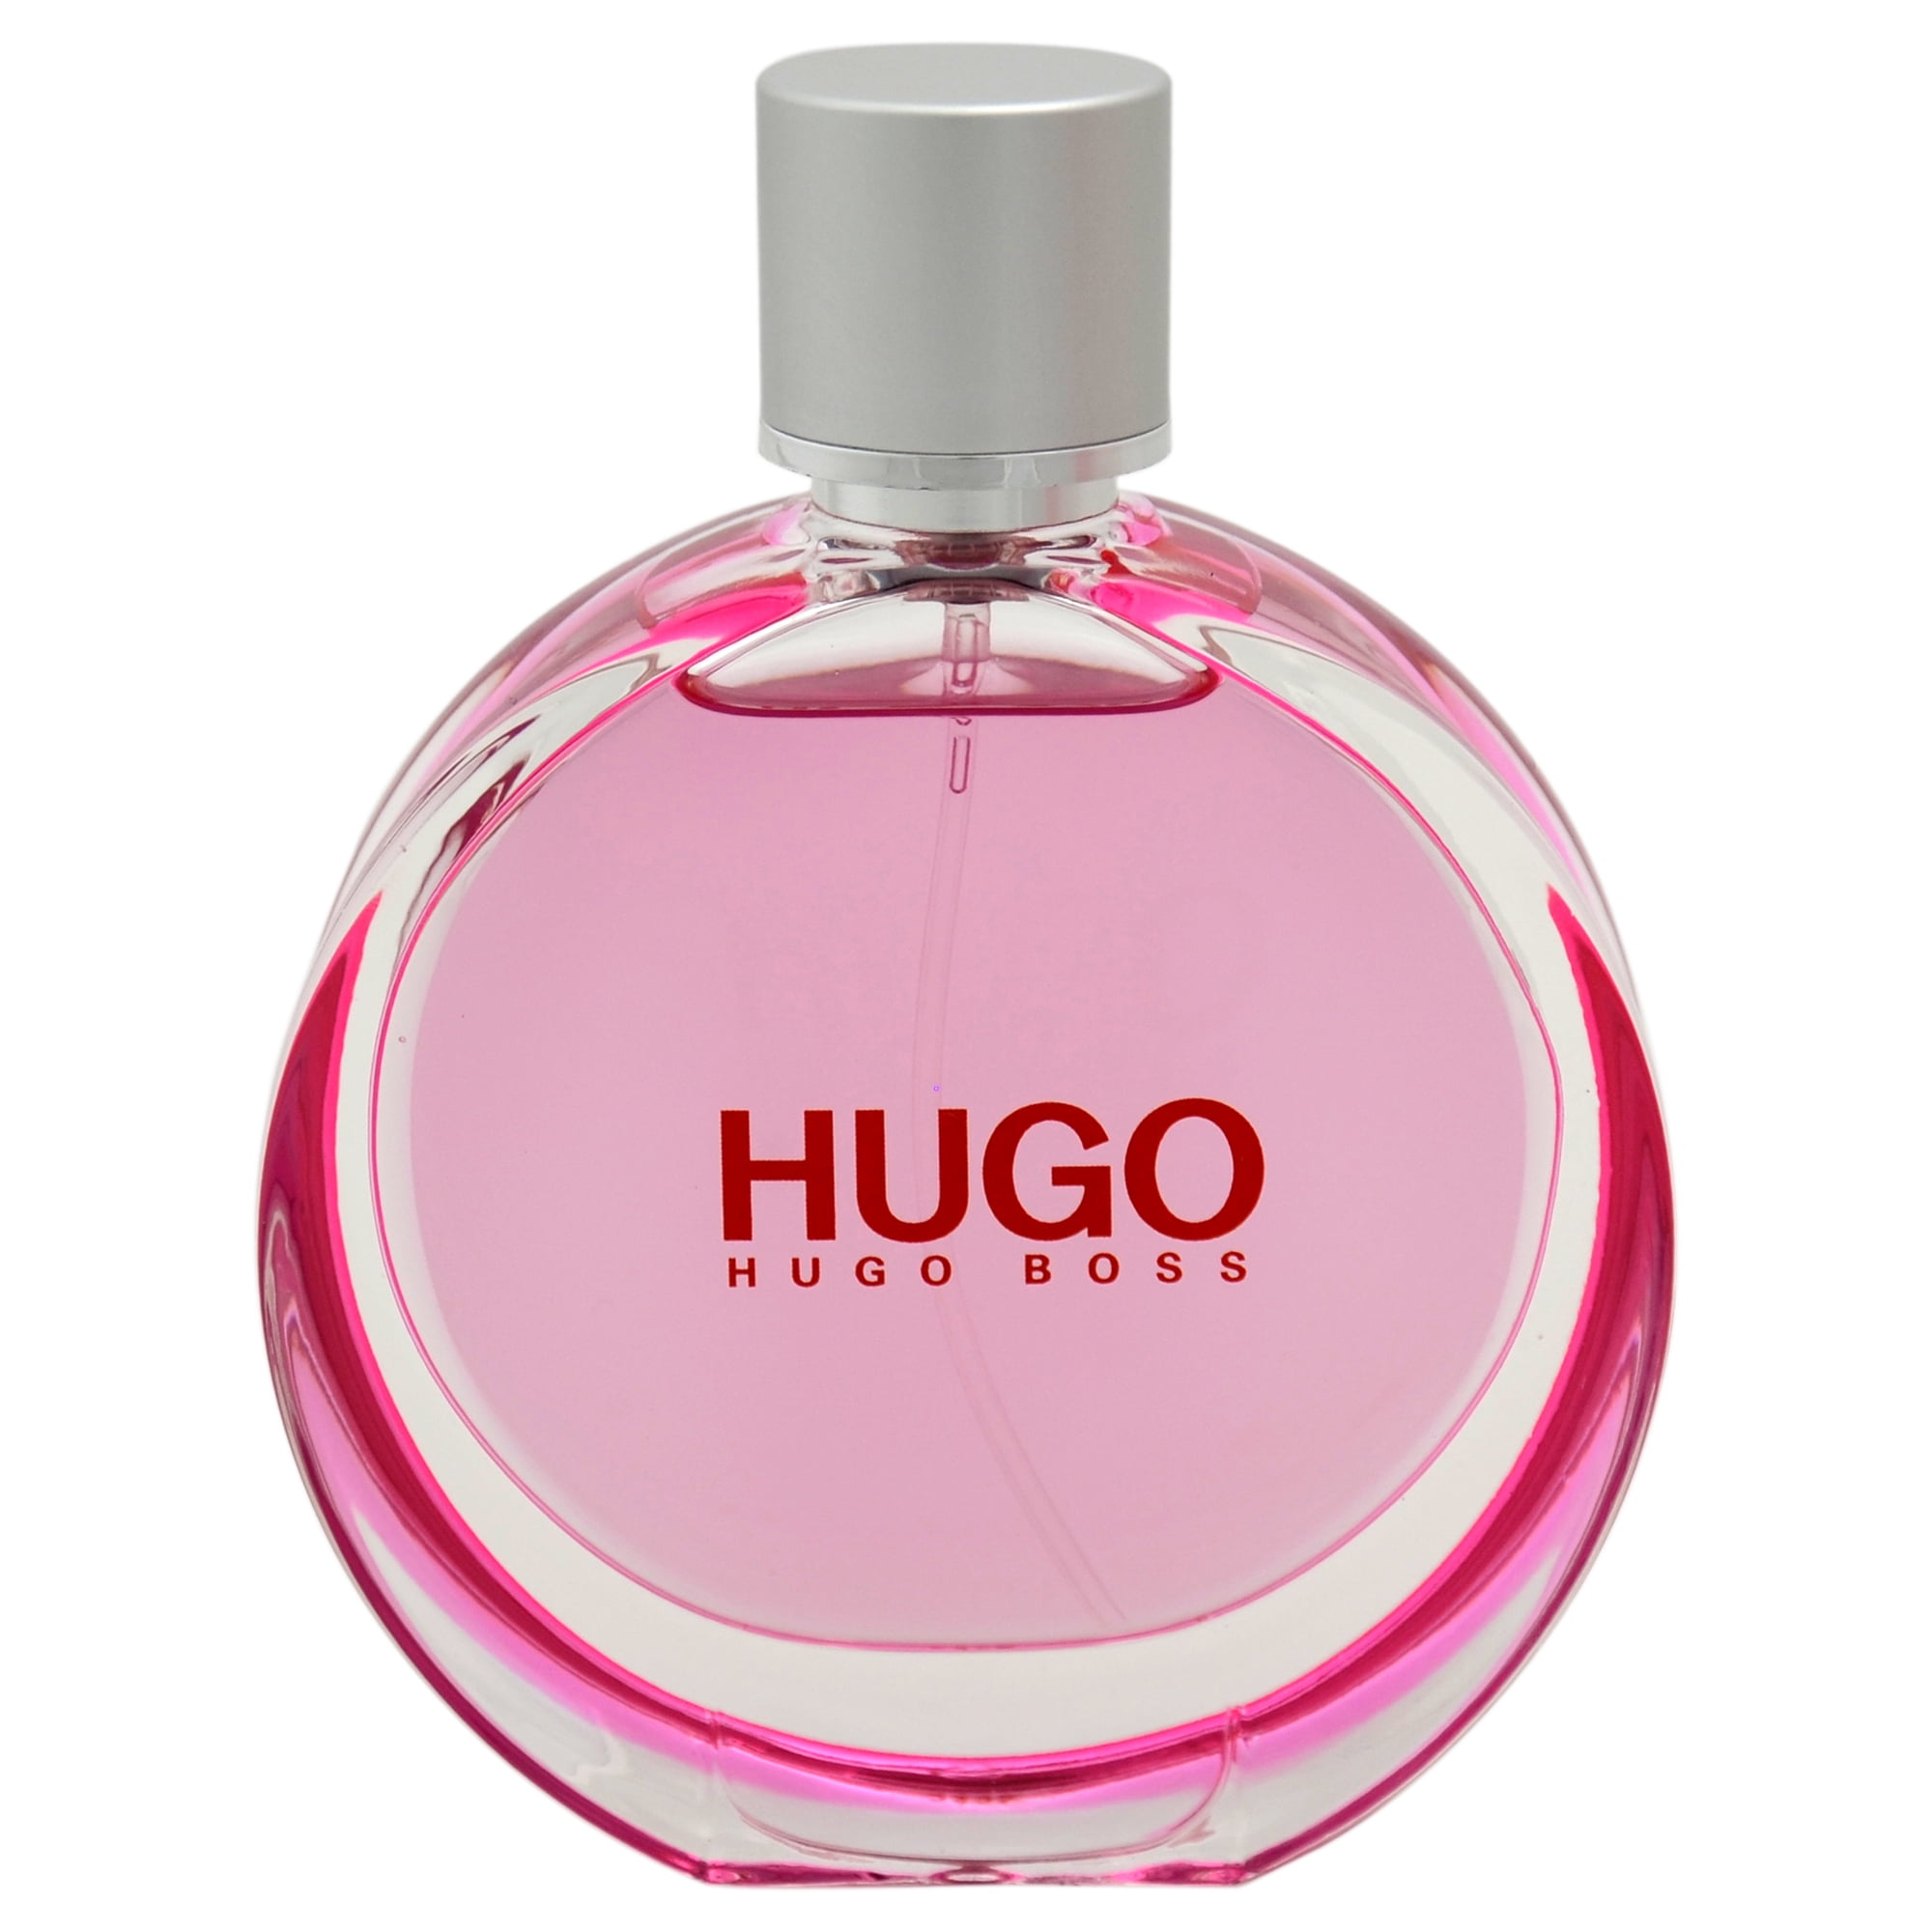 HUGO BOSS WOMAN EXTREME 75ML - Gardenia Pharmacy